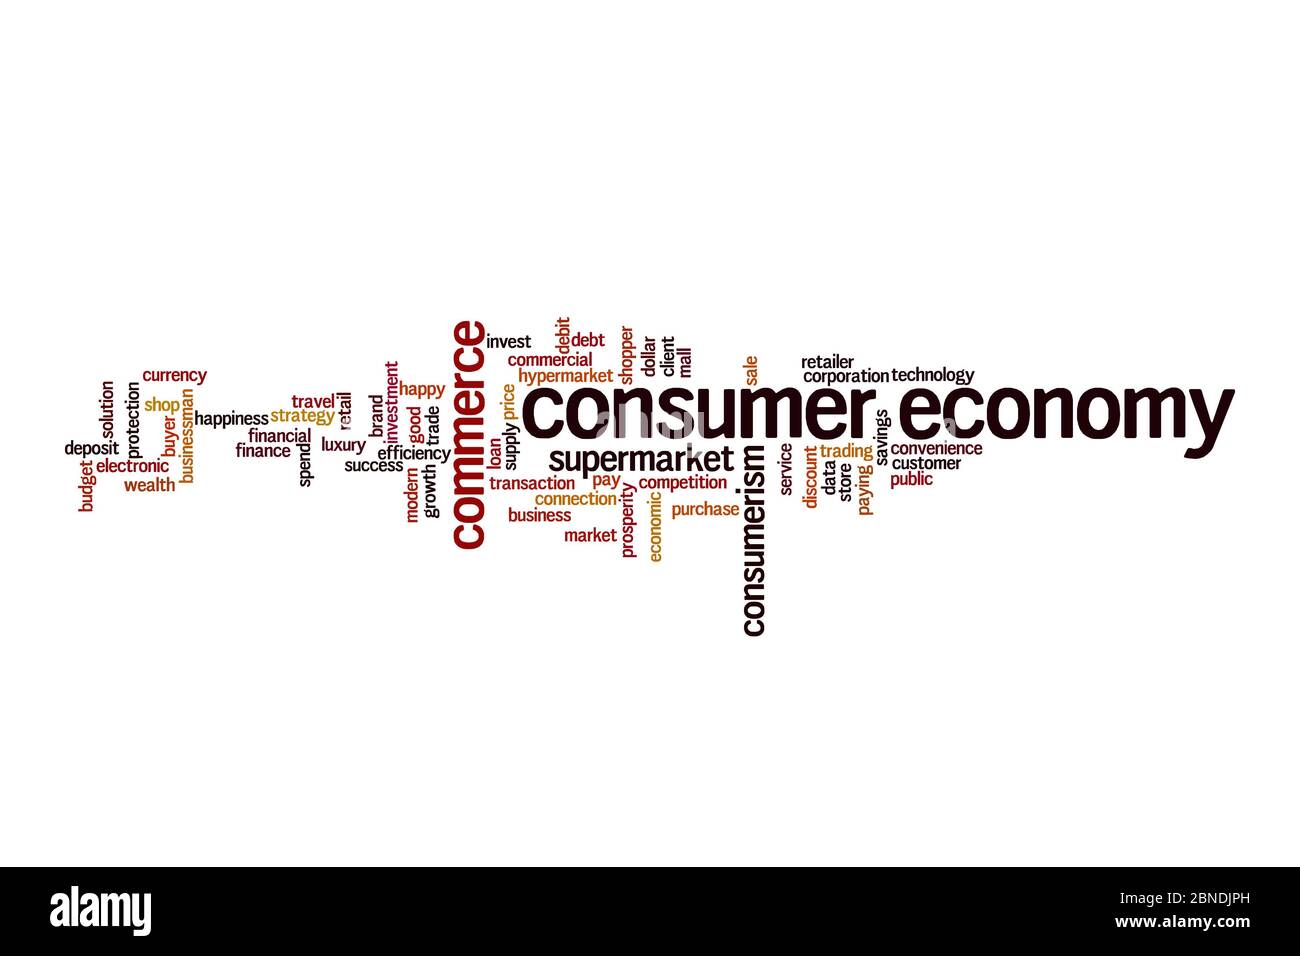 Consumer economy cloud concept on white background Stock Photo